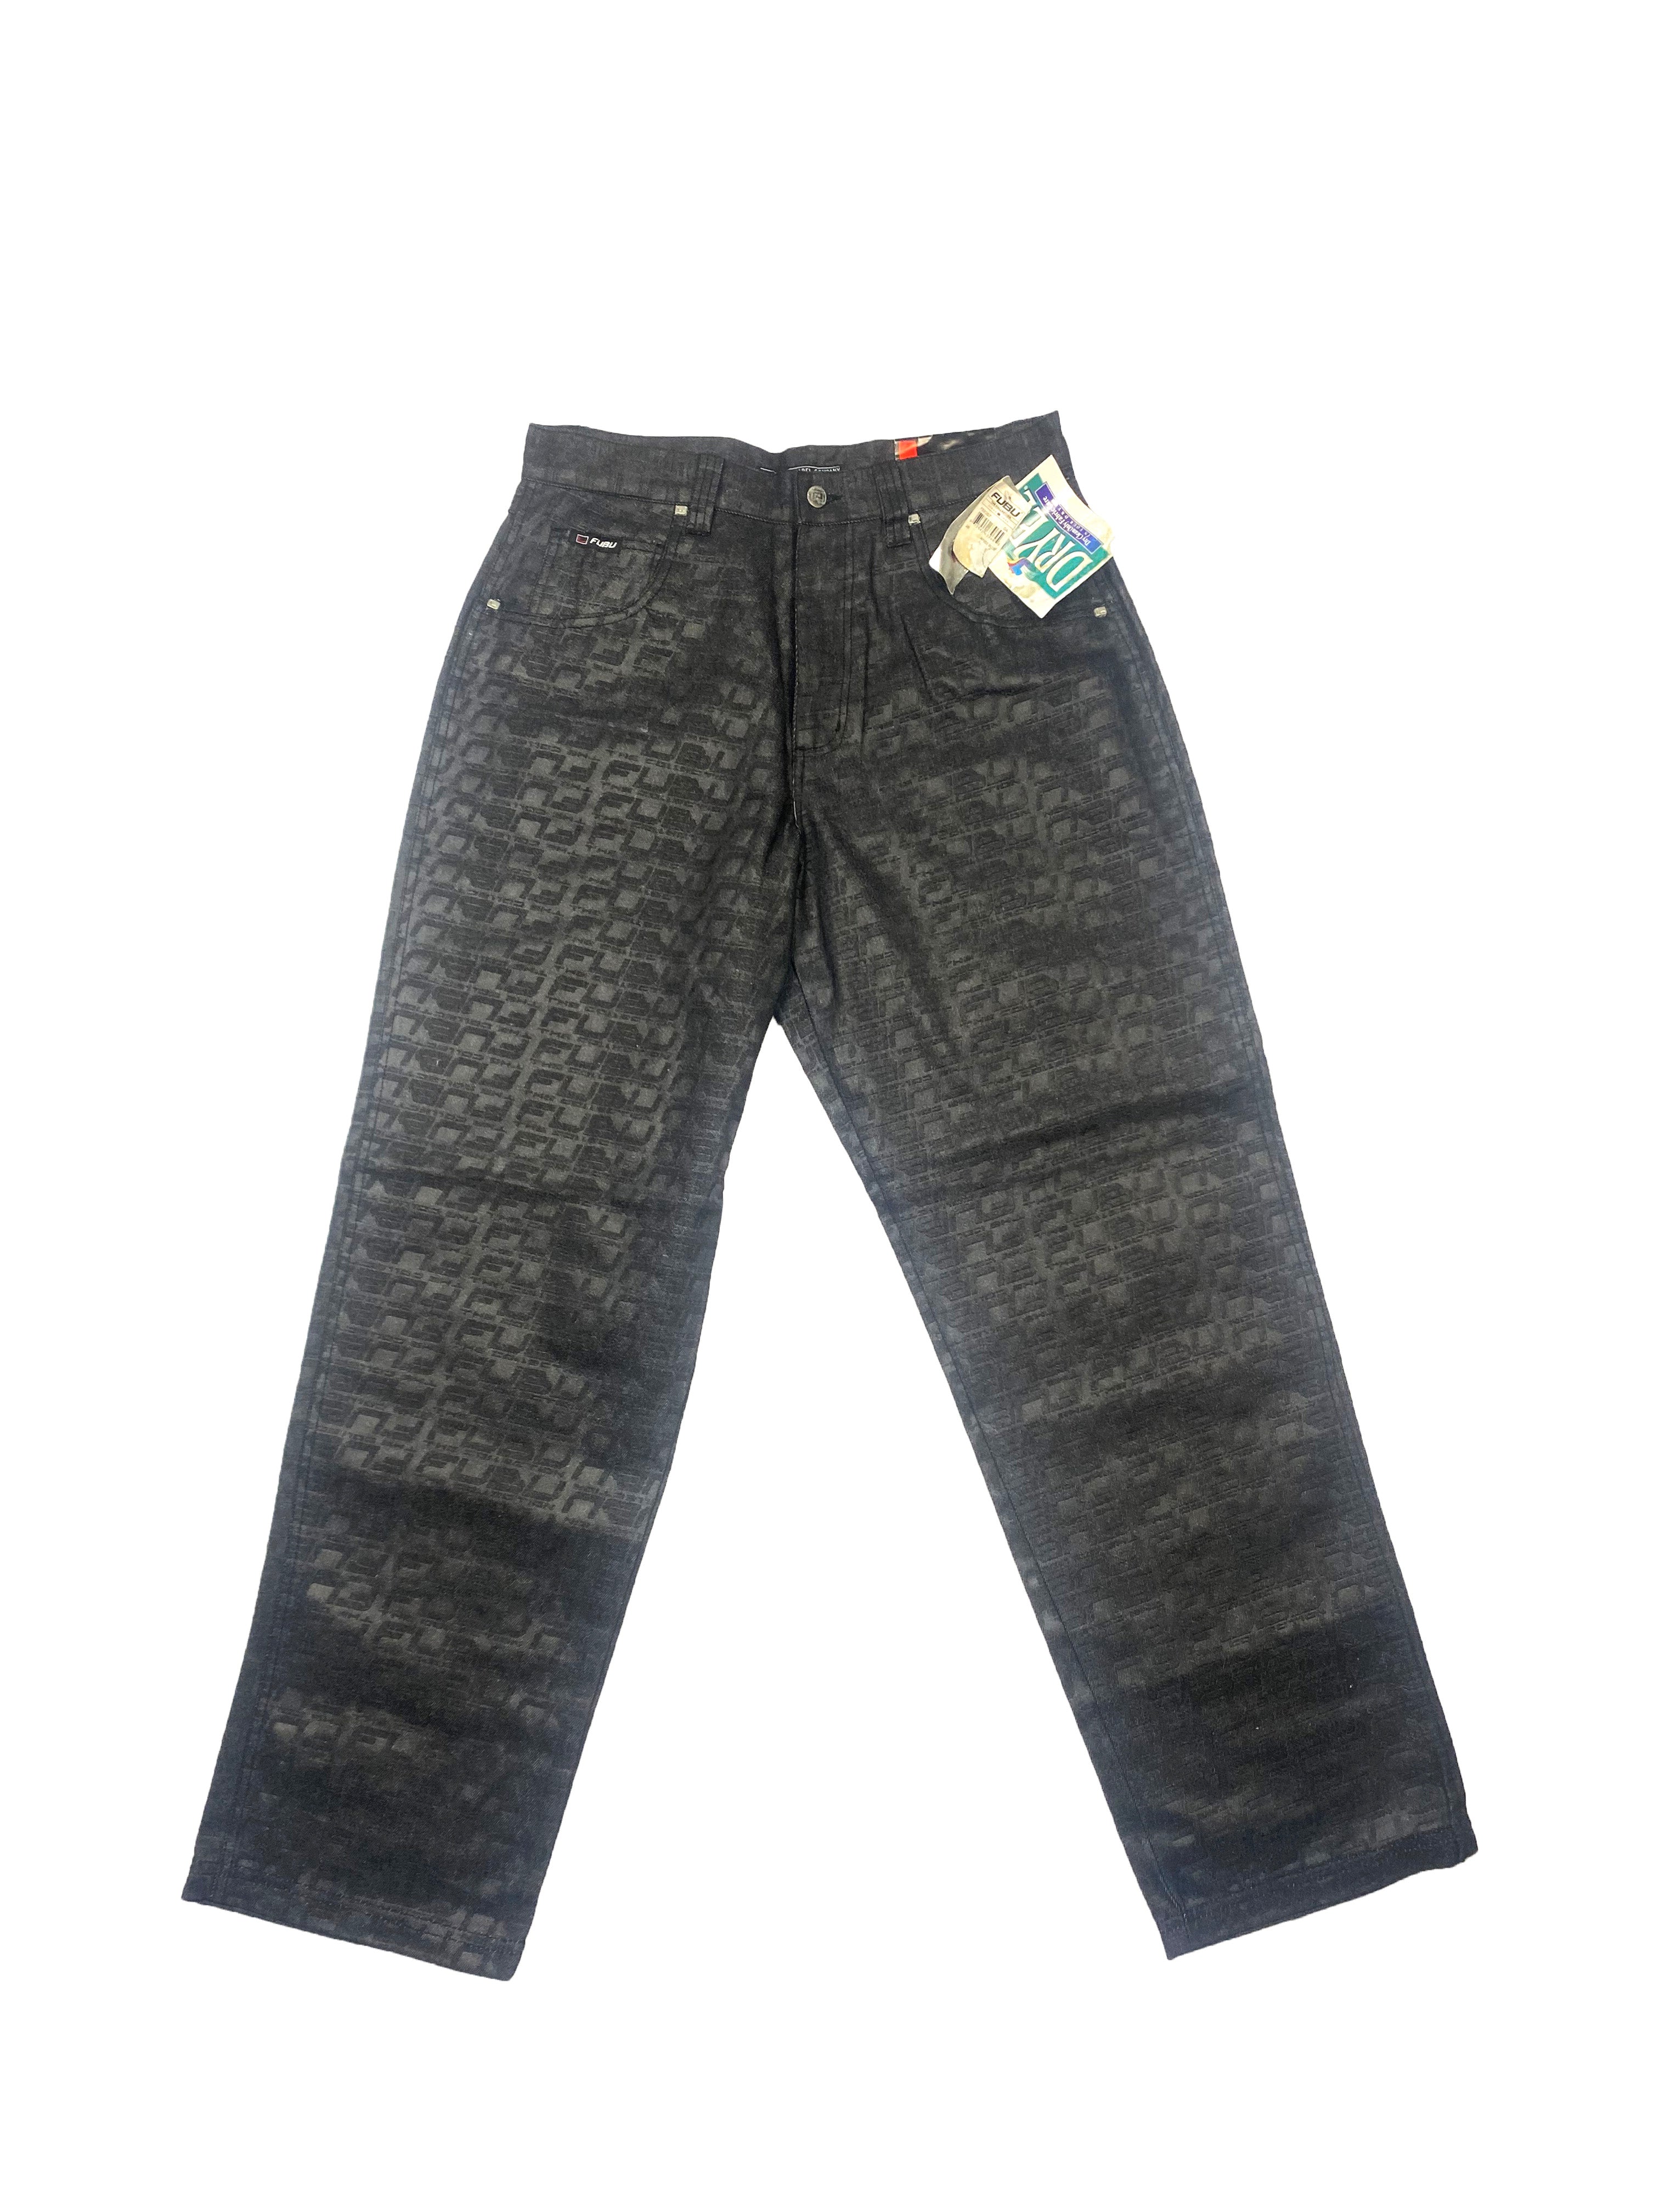 Fubu Black Spell Out Jeans BNWT 90's